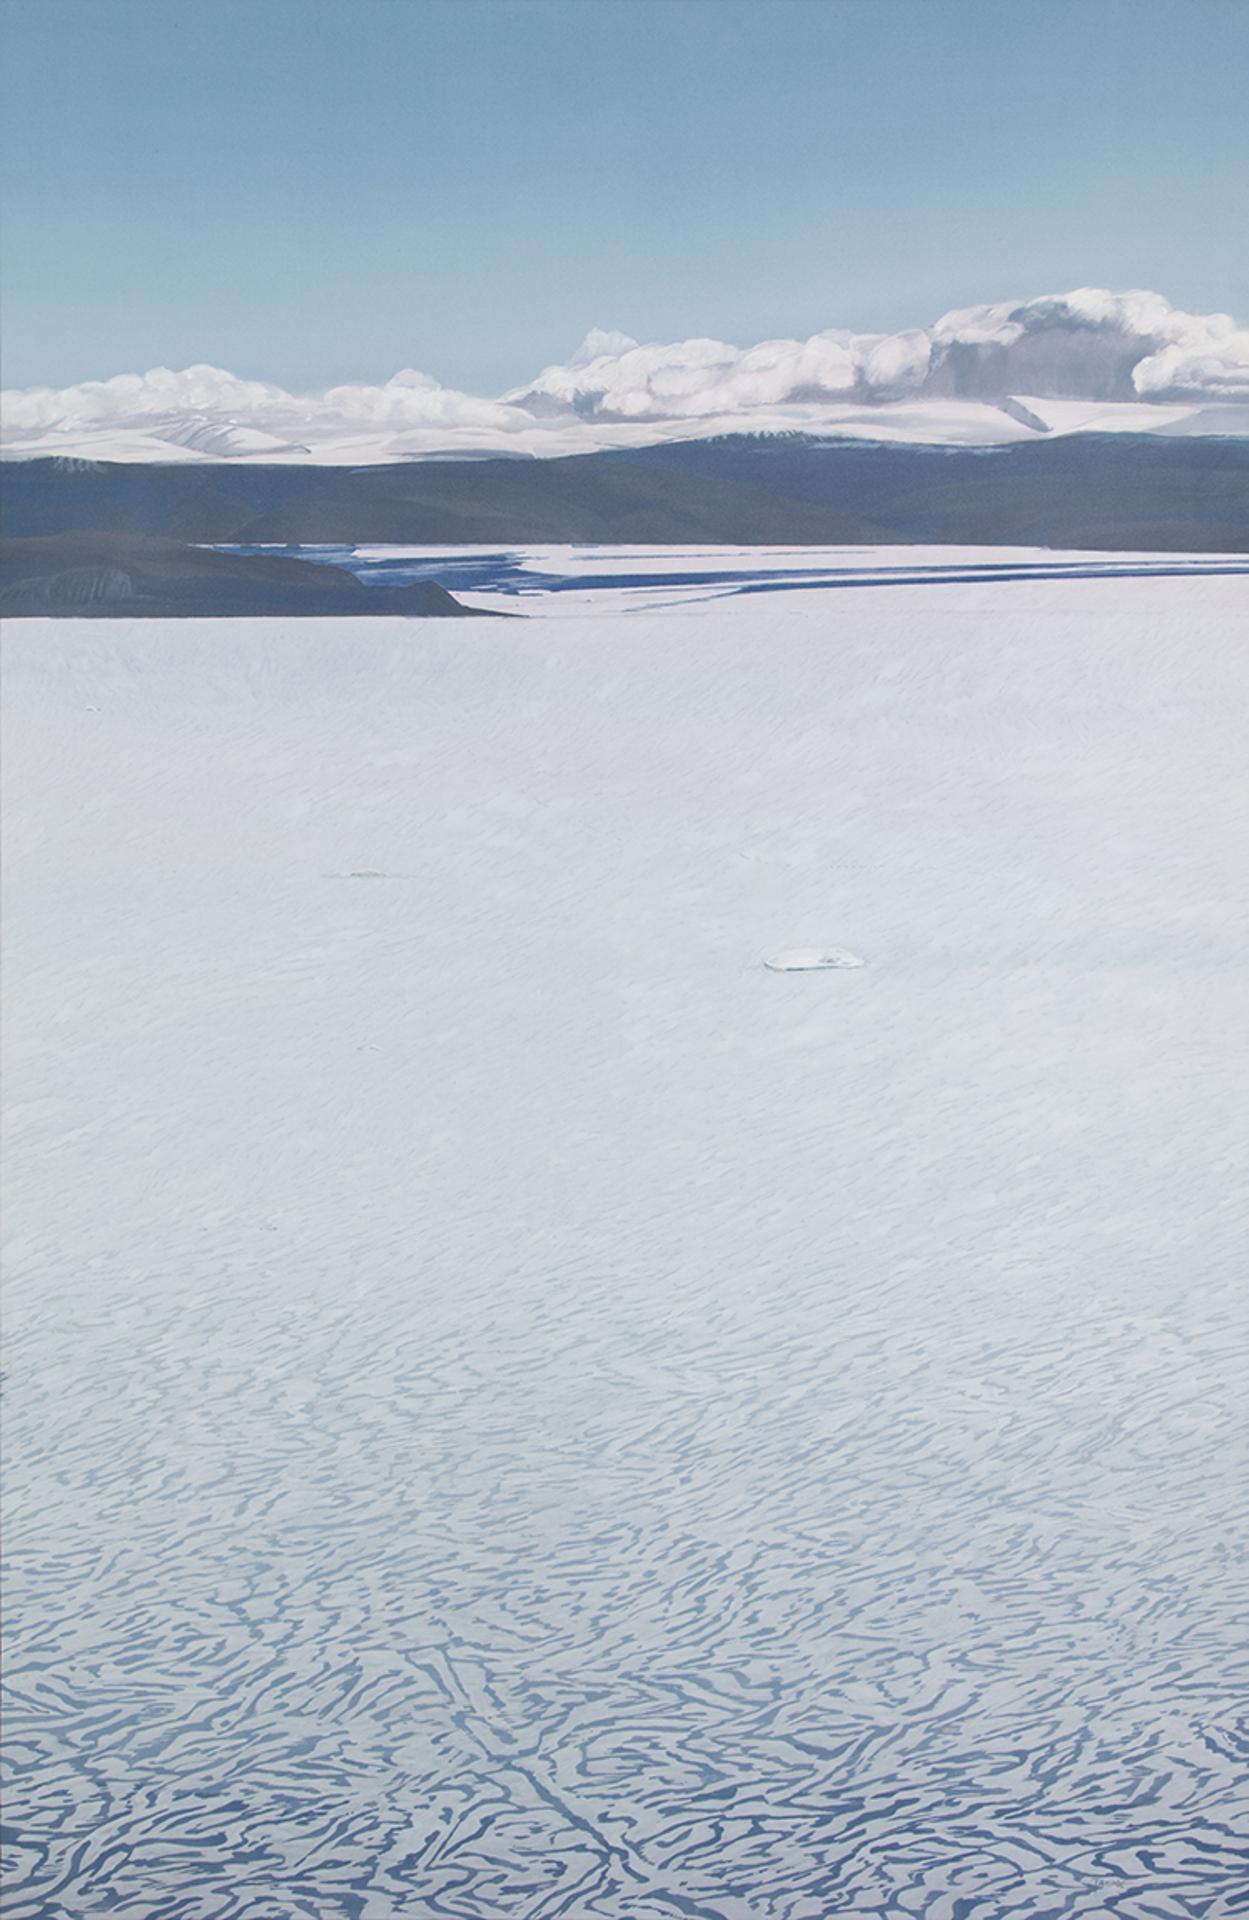 Takao Tanabe (1926) - High Arctic 6/90 Greeley Fiord, Ellesmere Island